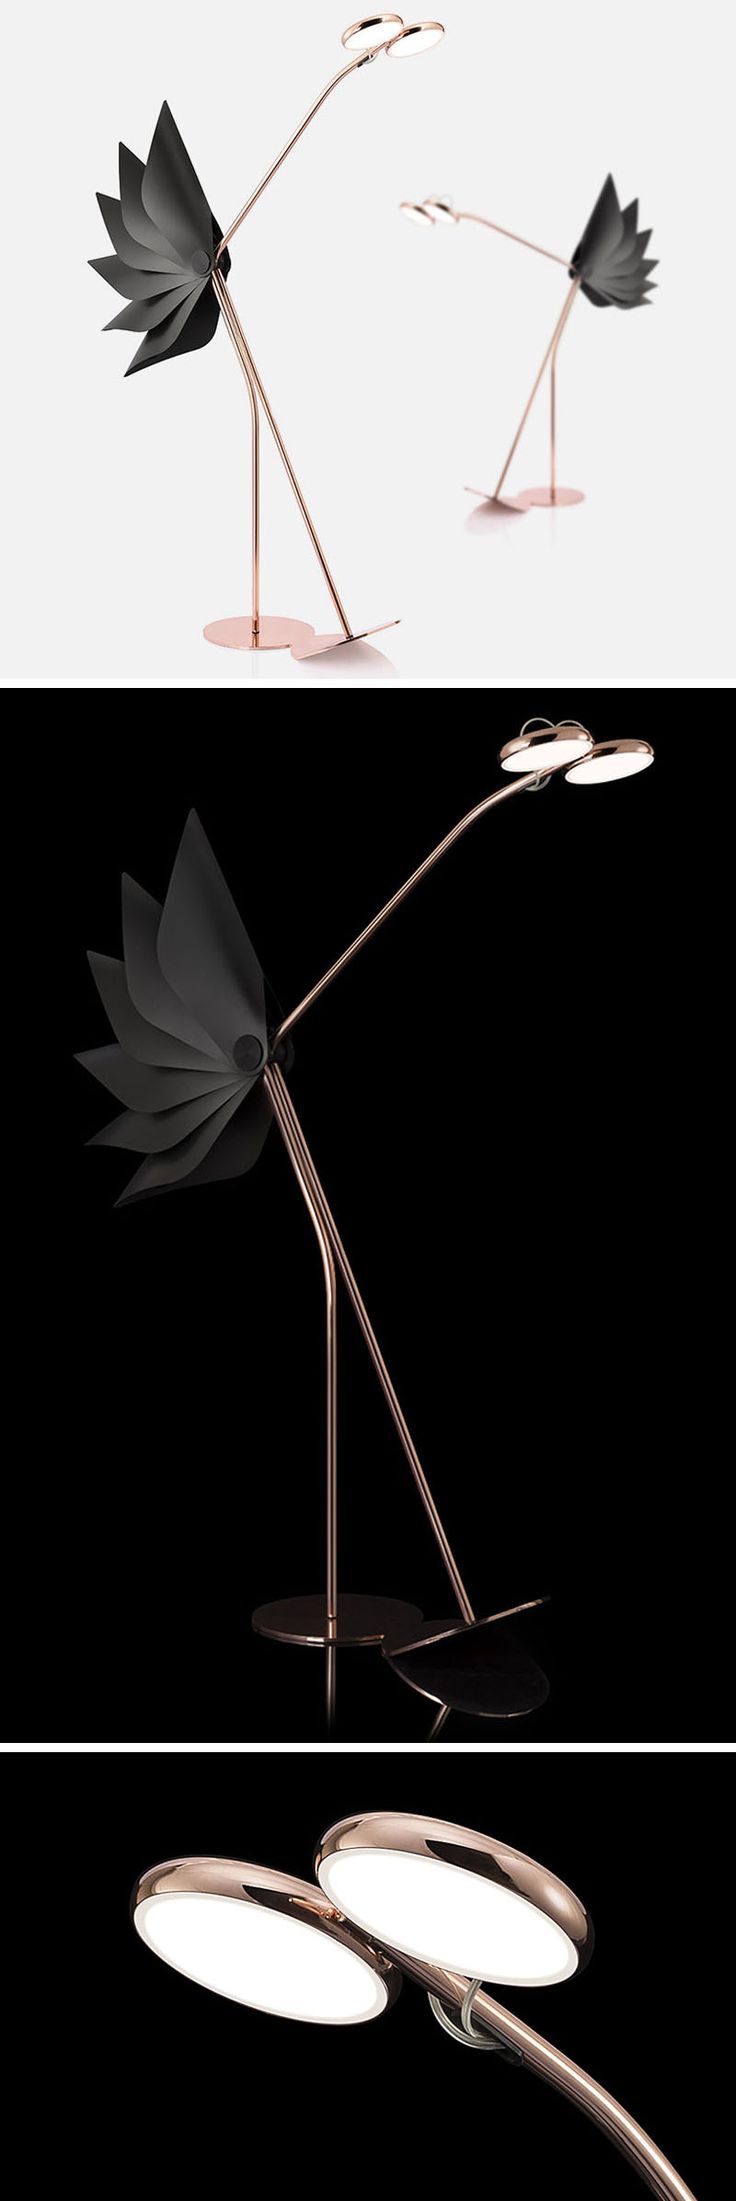 Sergi Ventura Has Designed Lighting That Looks Like A Bird And A Ballerina